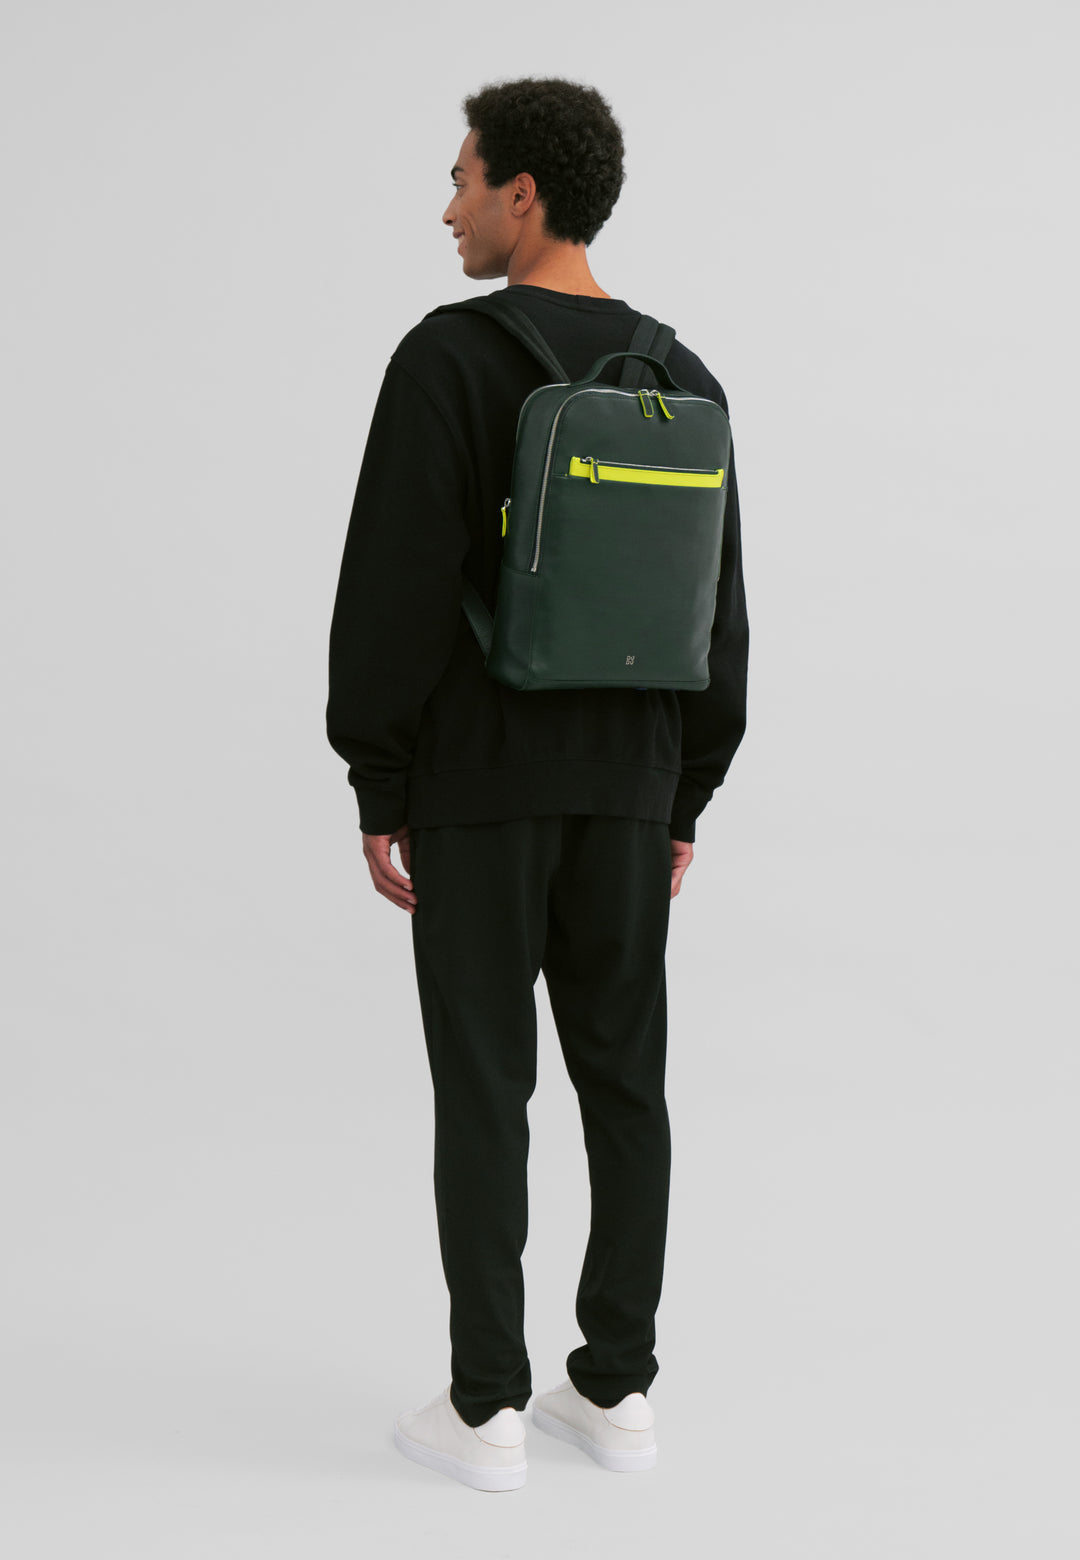 DuDu 高达16"的男用真皮PC背包,大容量时尚旅行工作背包,带手提箱